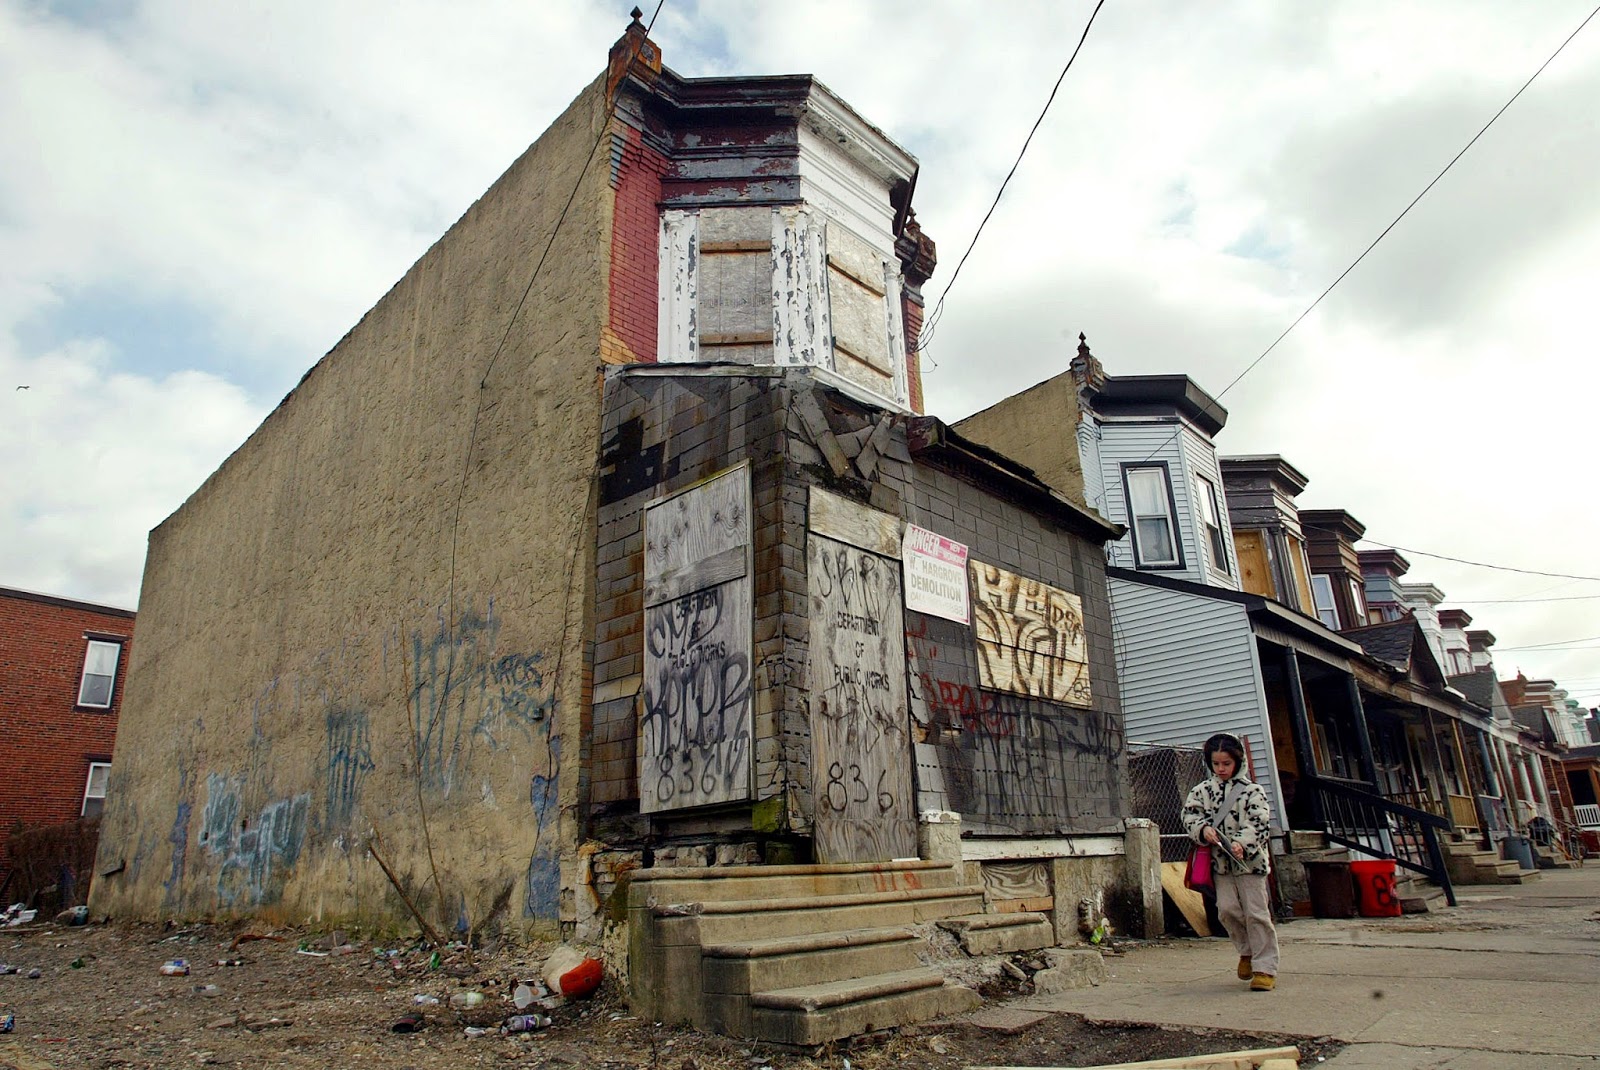 NIU Urban Communities 2016: Deteriorating Neighborhoods